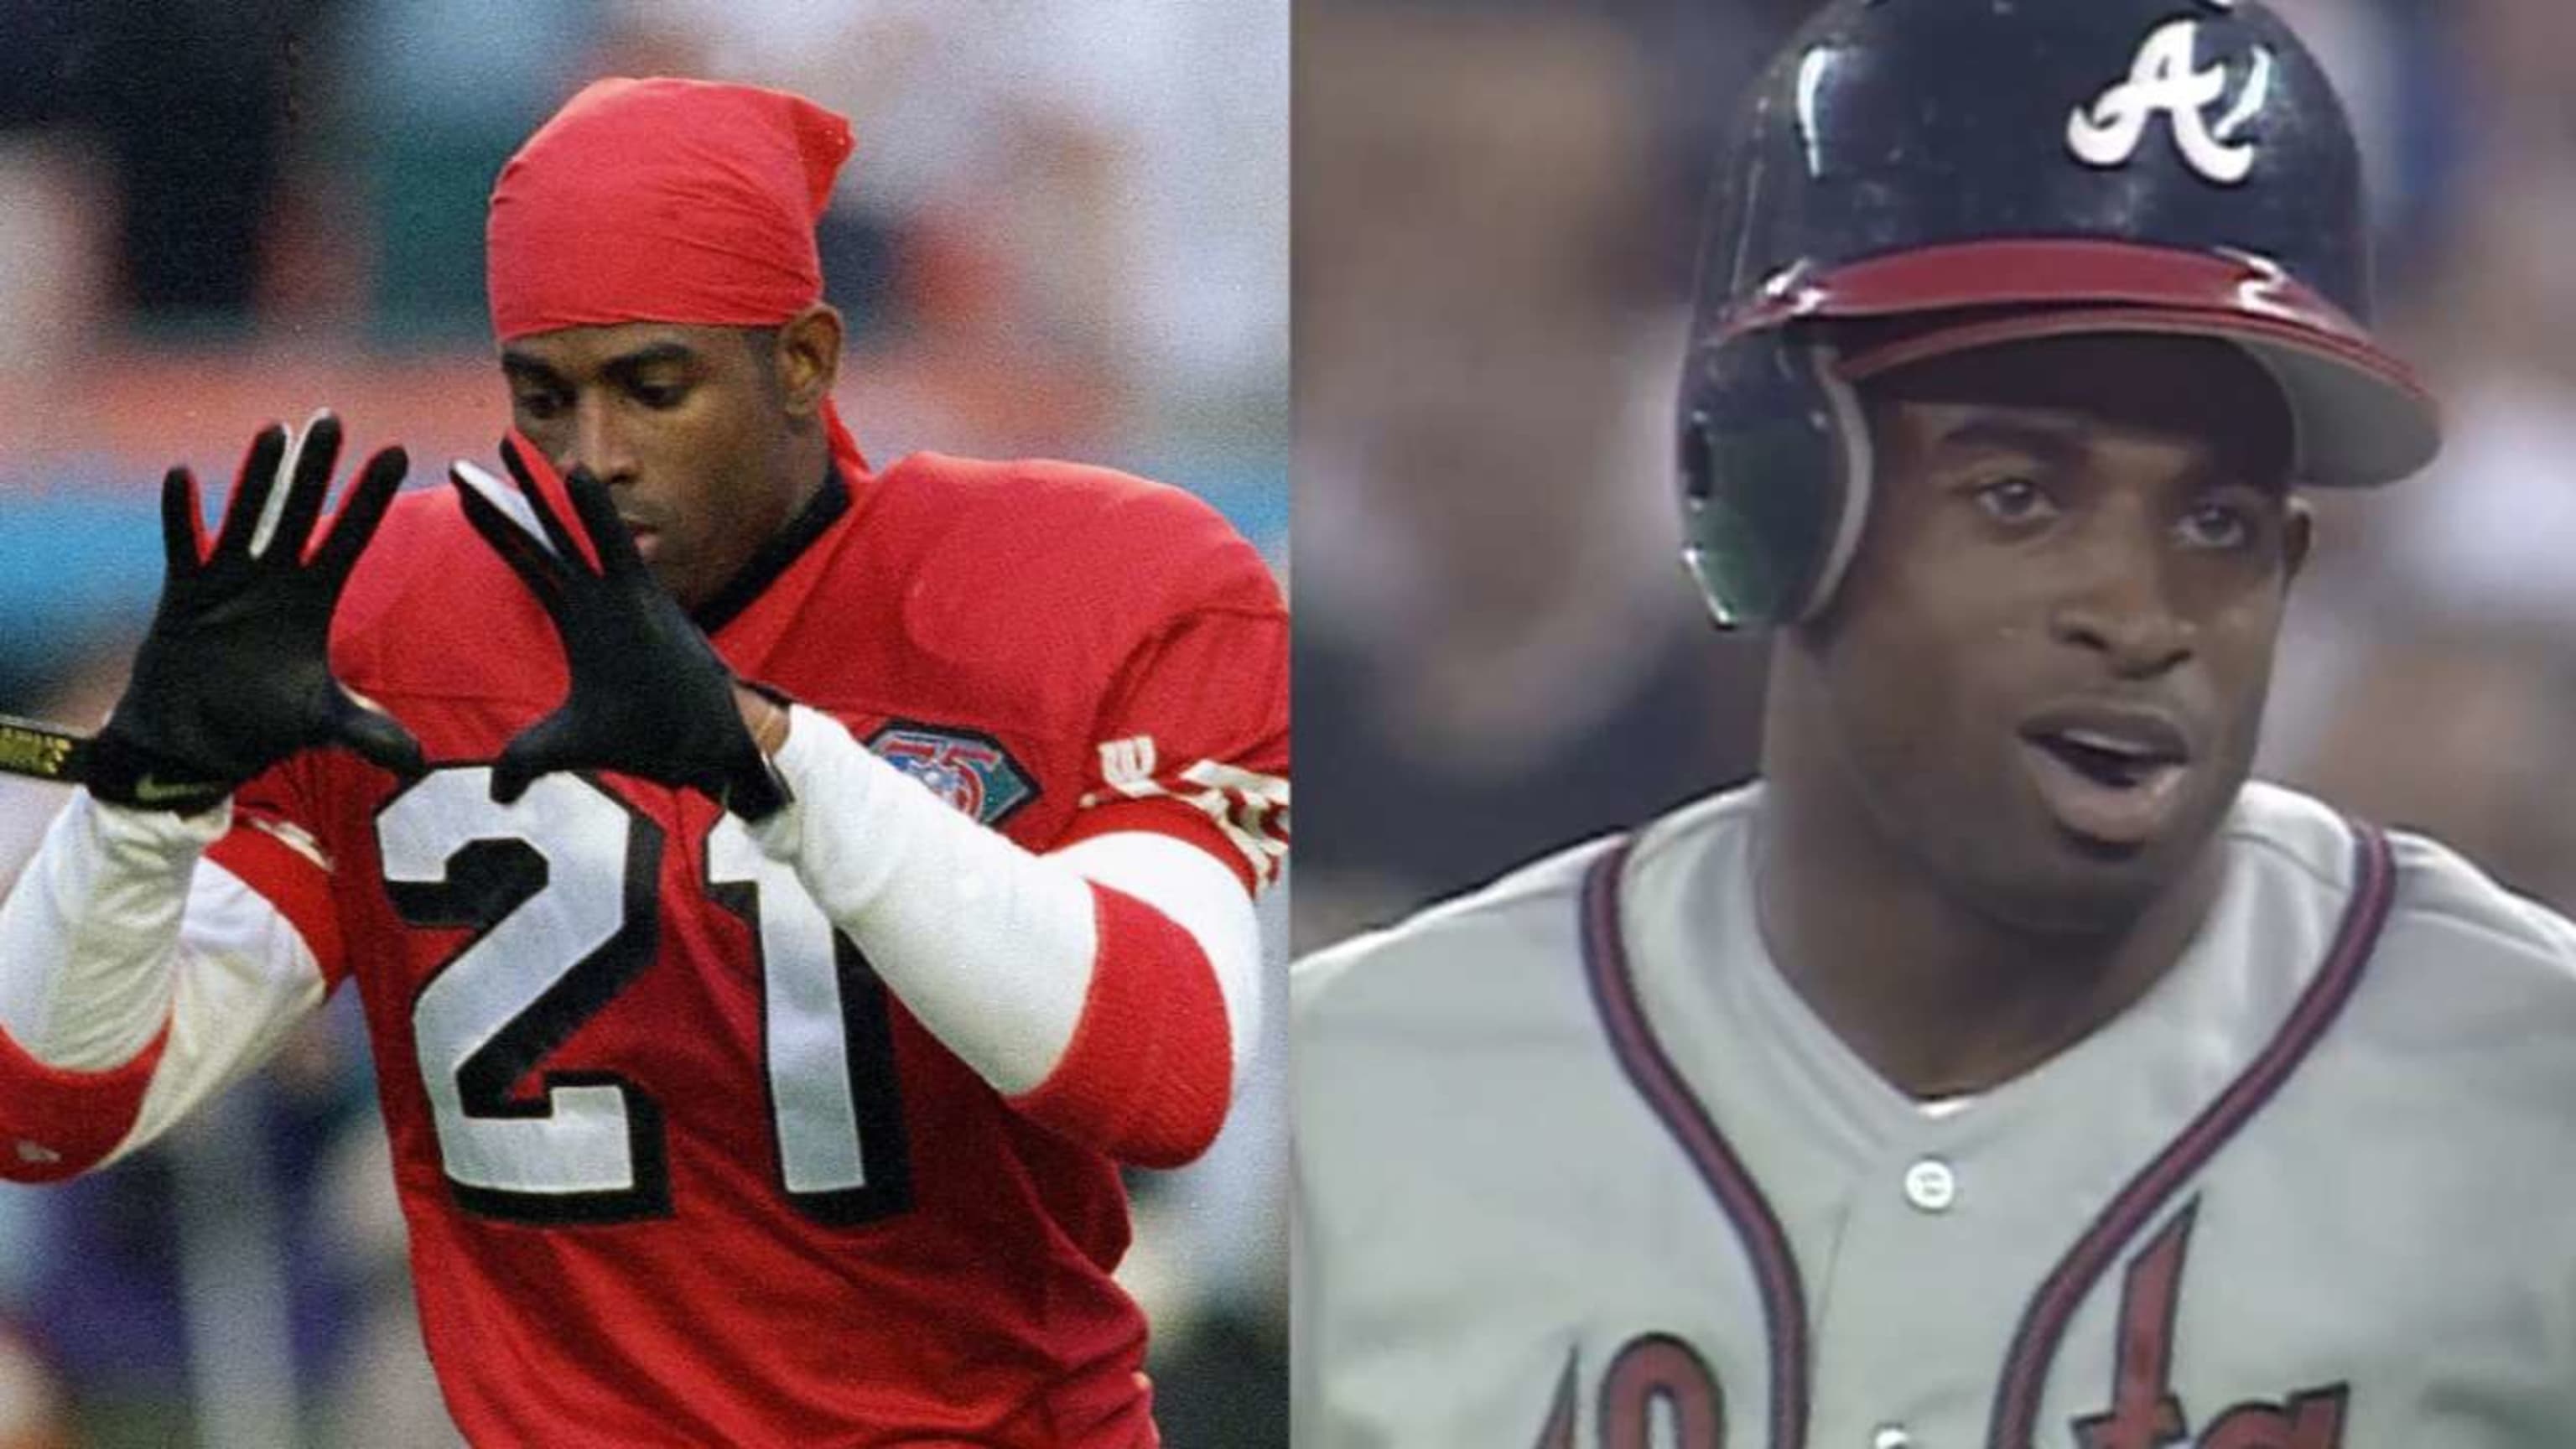 20 years ago, Deion Sanders' baseball career ended with HR against